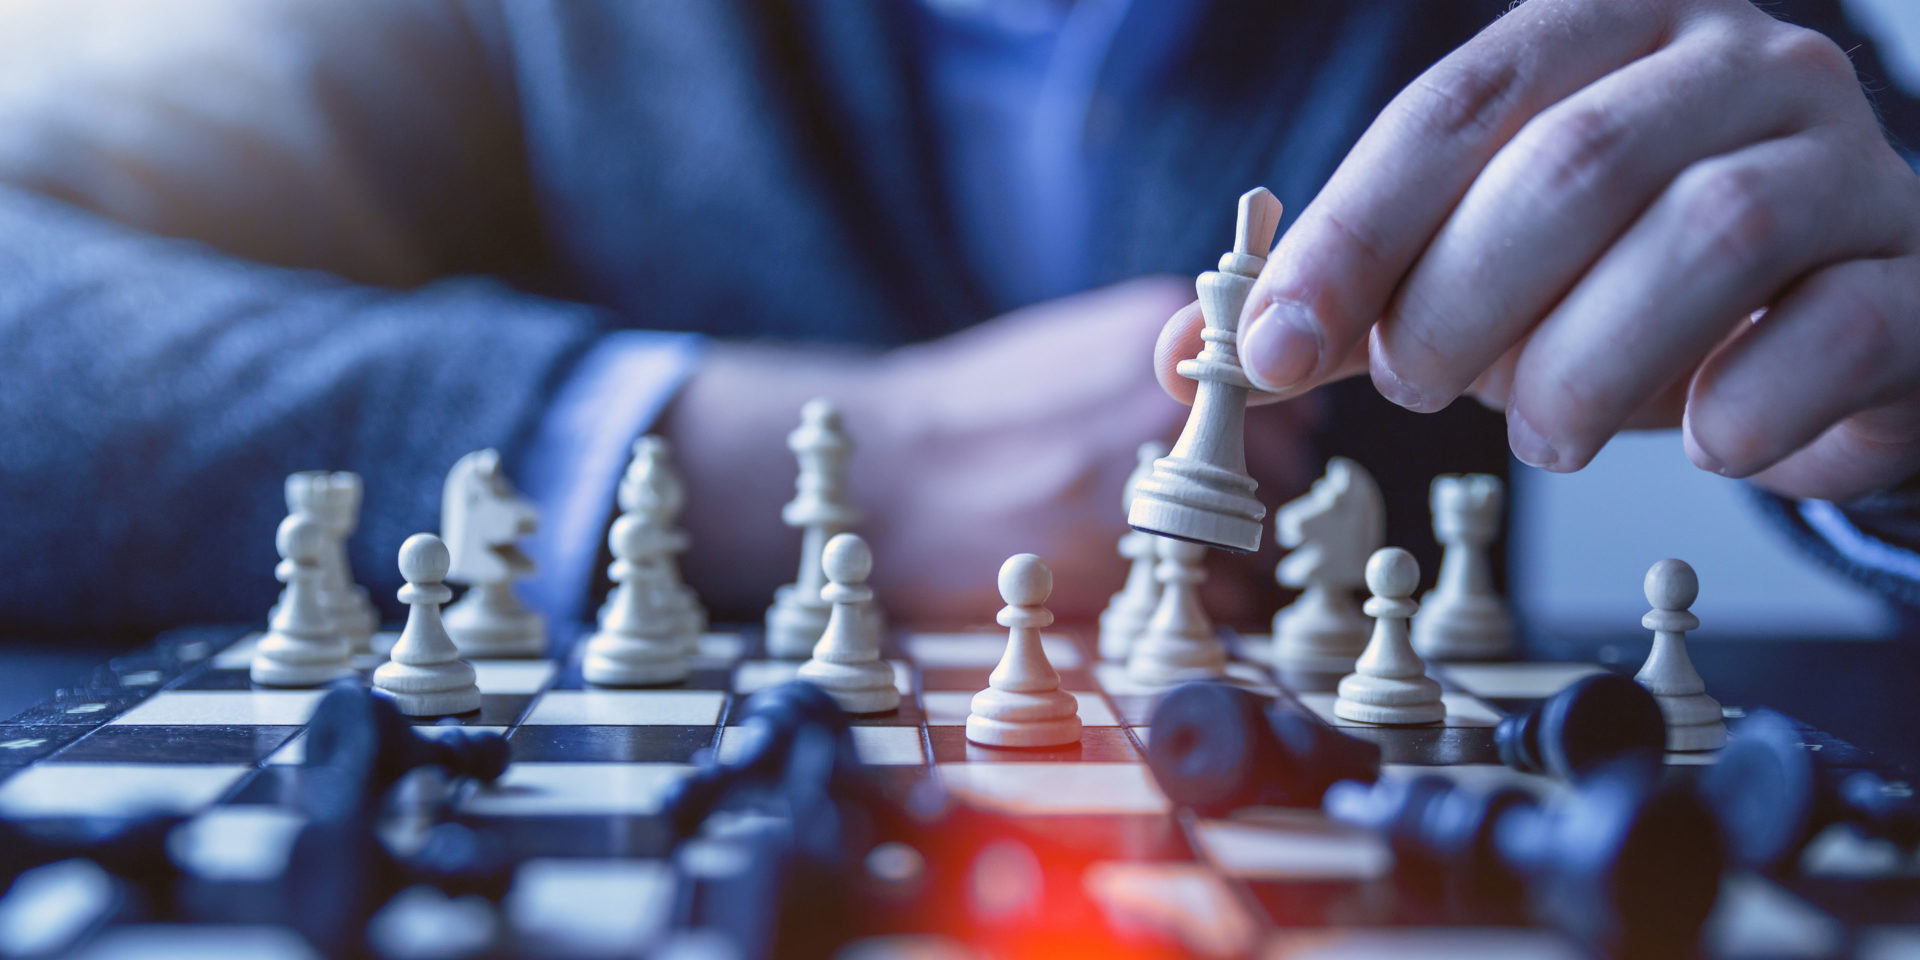 Decision Making - Dan Stromer on Casino Leadership - chess game analogy